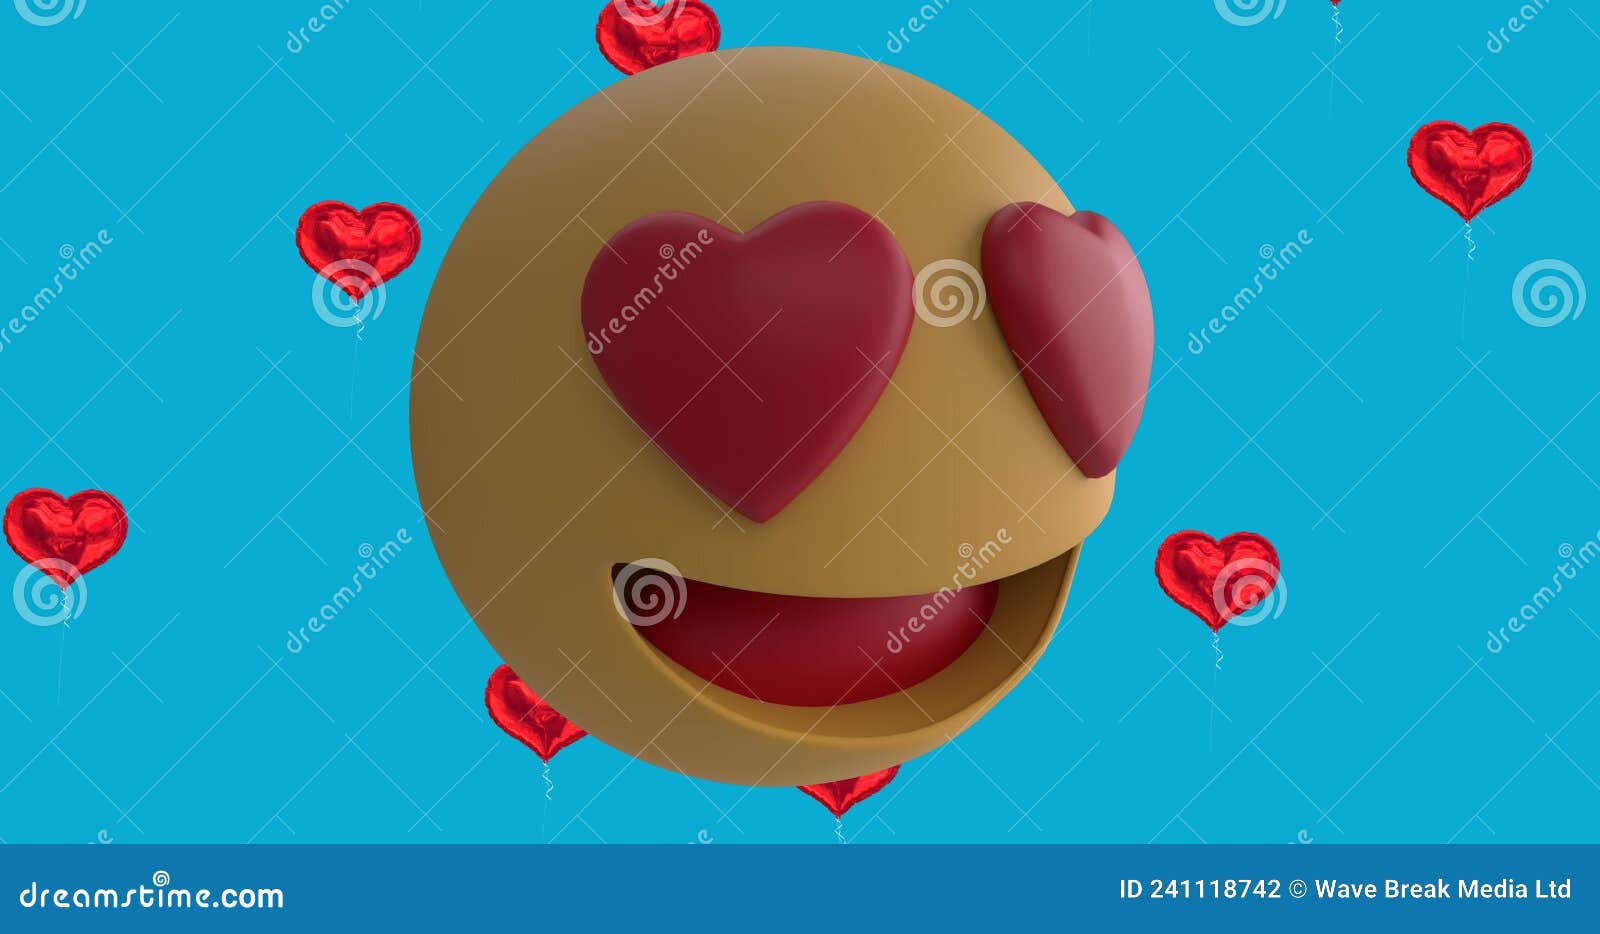 Facrbook chat emoji baloons hearts